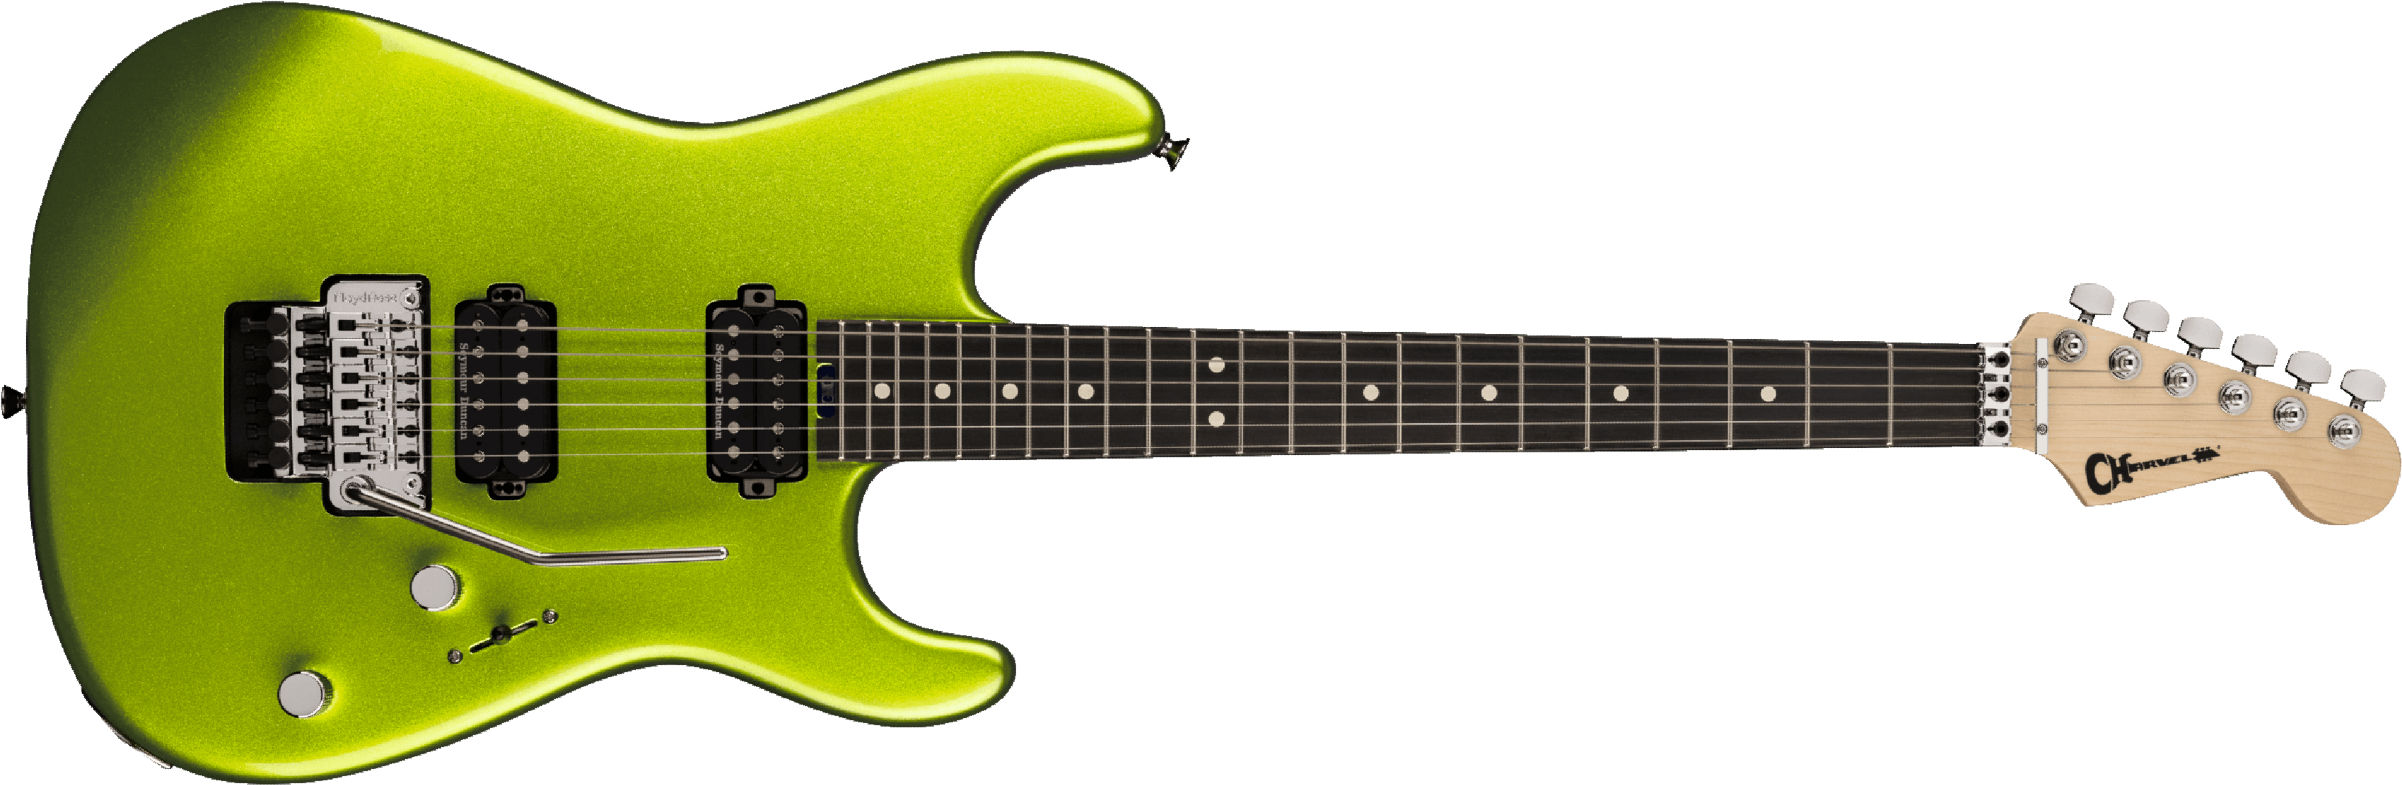 Charvel San Dimas Style 1 Hh Fr E Pro-mod Seymour Duncan Eb - Lime Green Metallic - E-Gitarre in Str-Form - Main picture